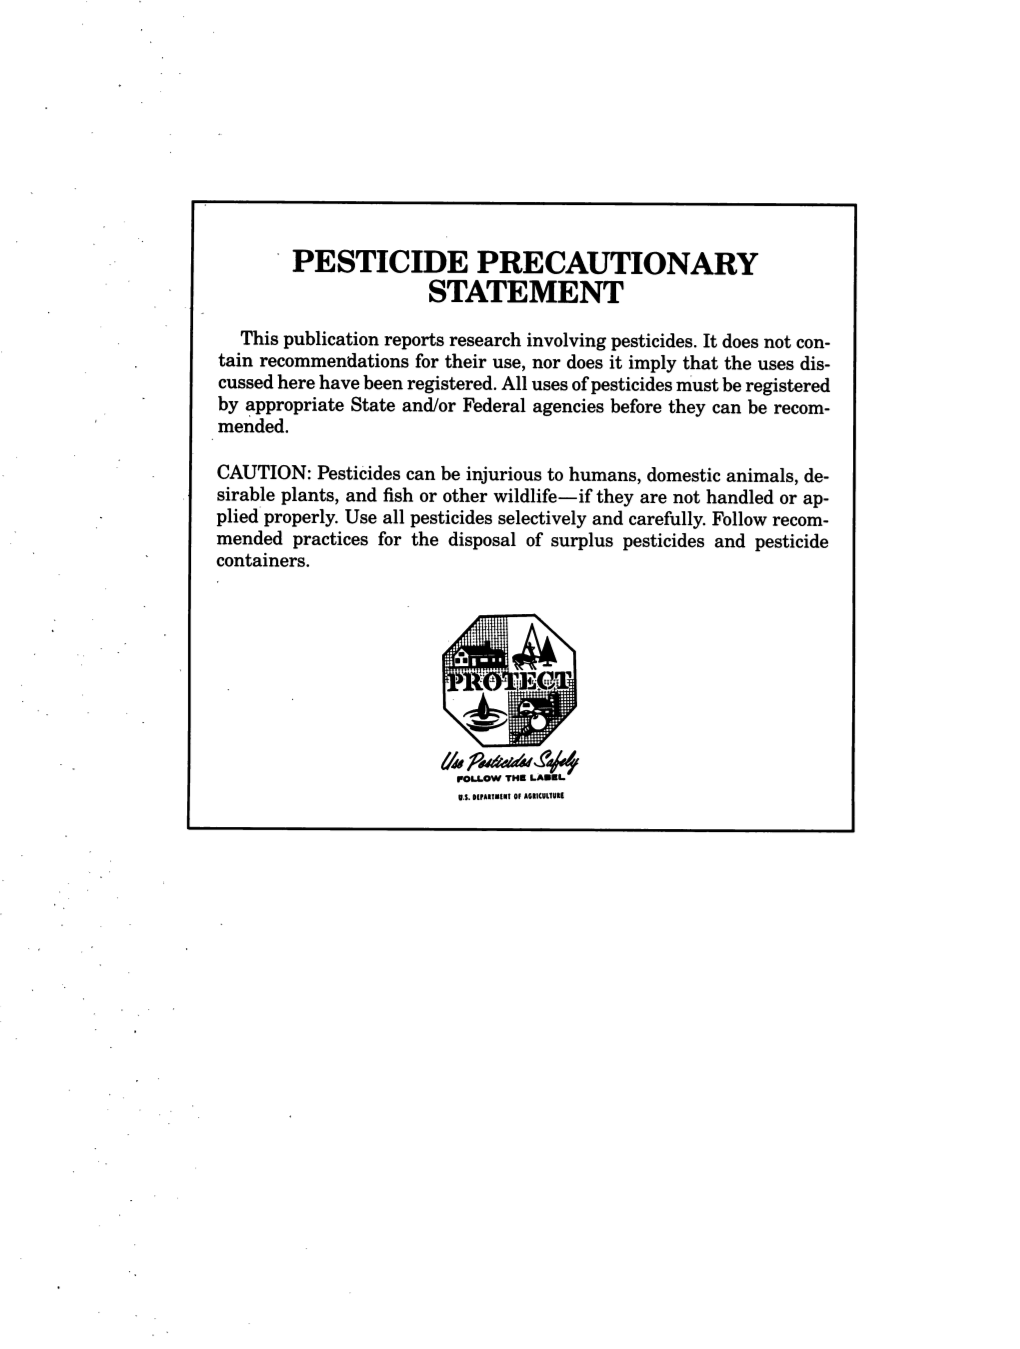 Pesticide Precautionary Statement